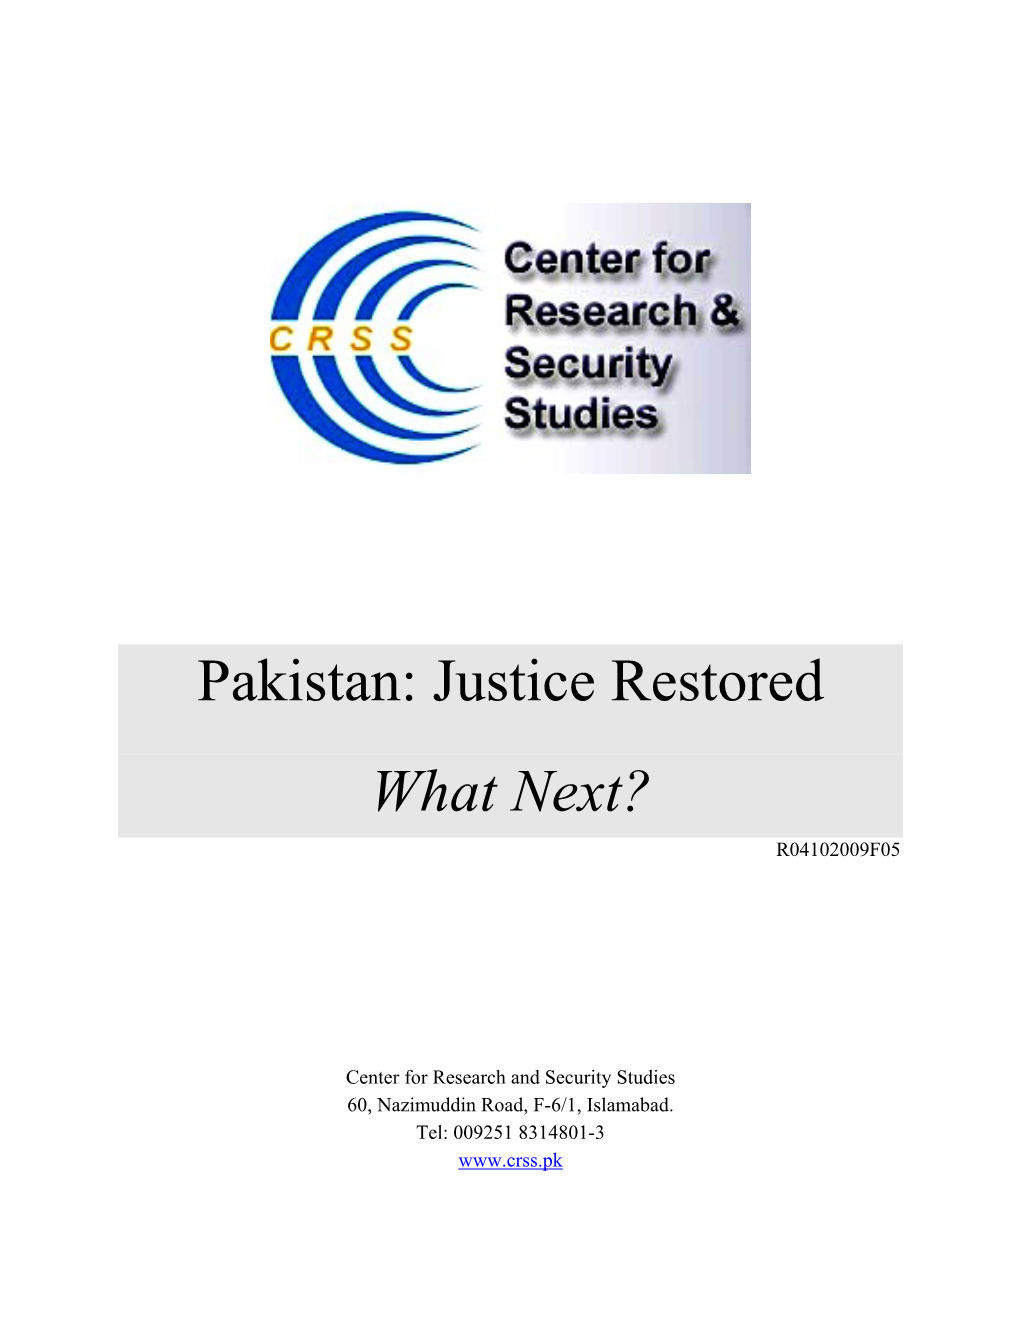 Pakistan: Justice Restored What Next?